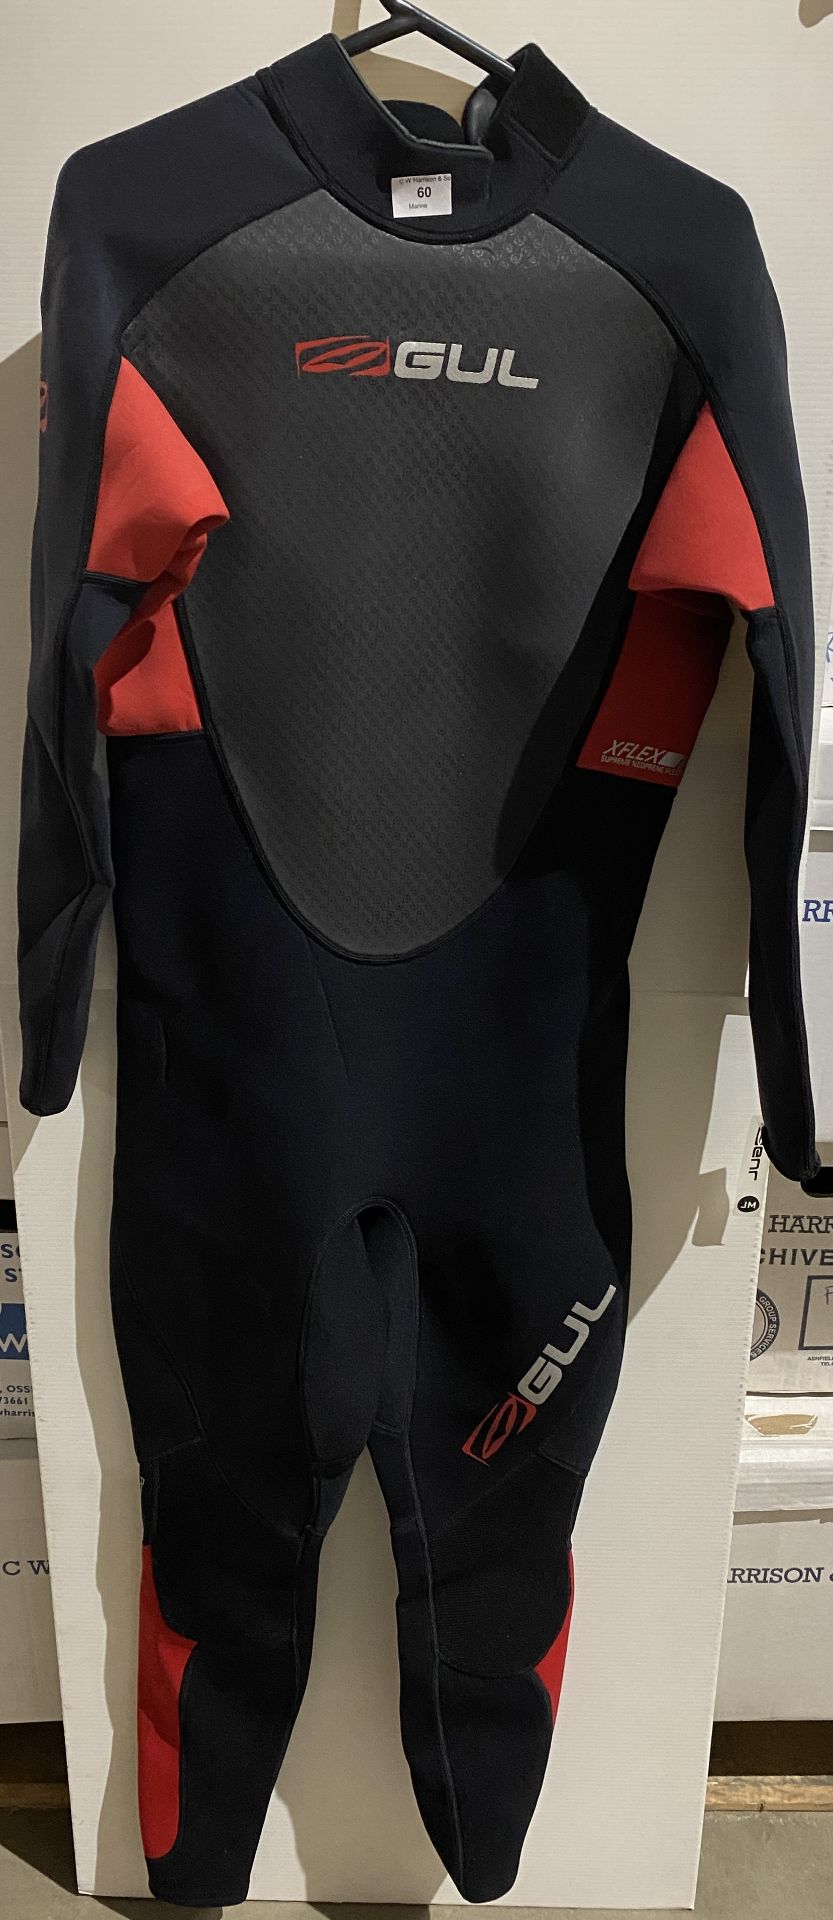 GUL Response 32 SDL FL T2 Steamer wetsuit - Size M/L - (Saleroom Location G04)